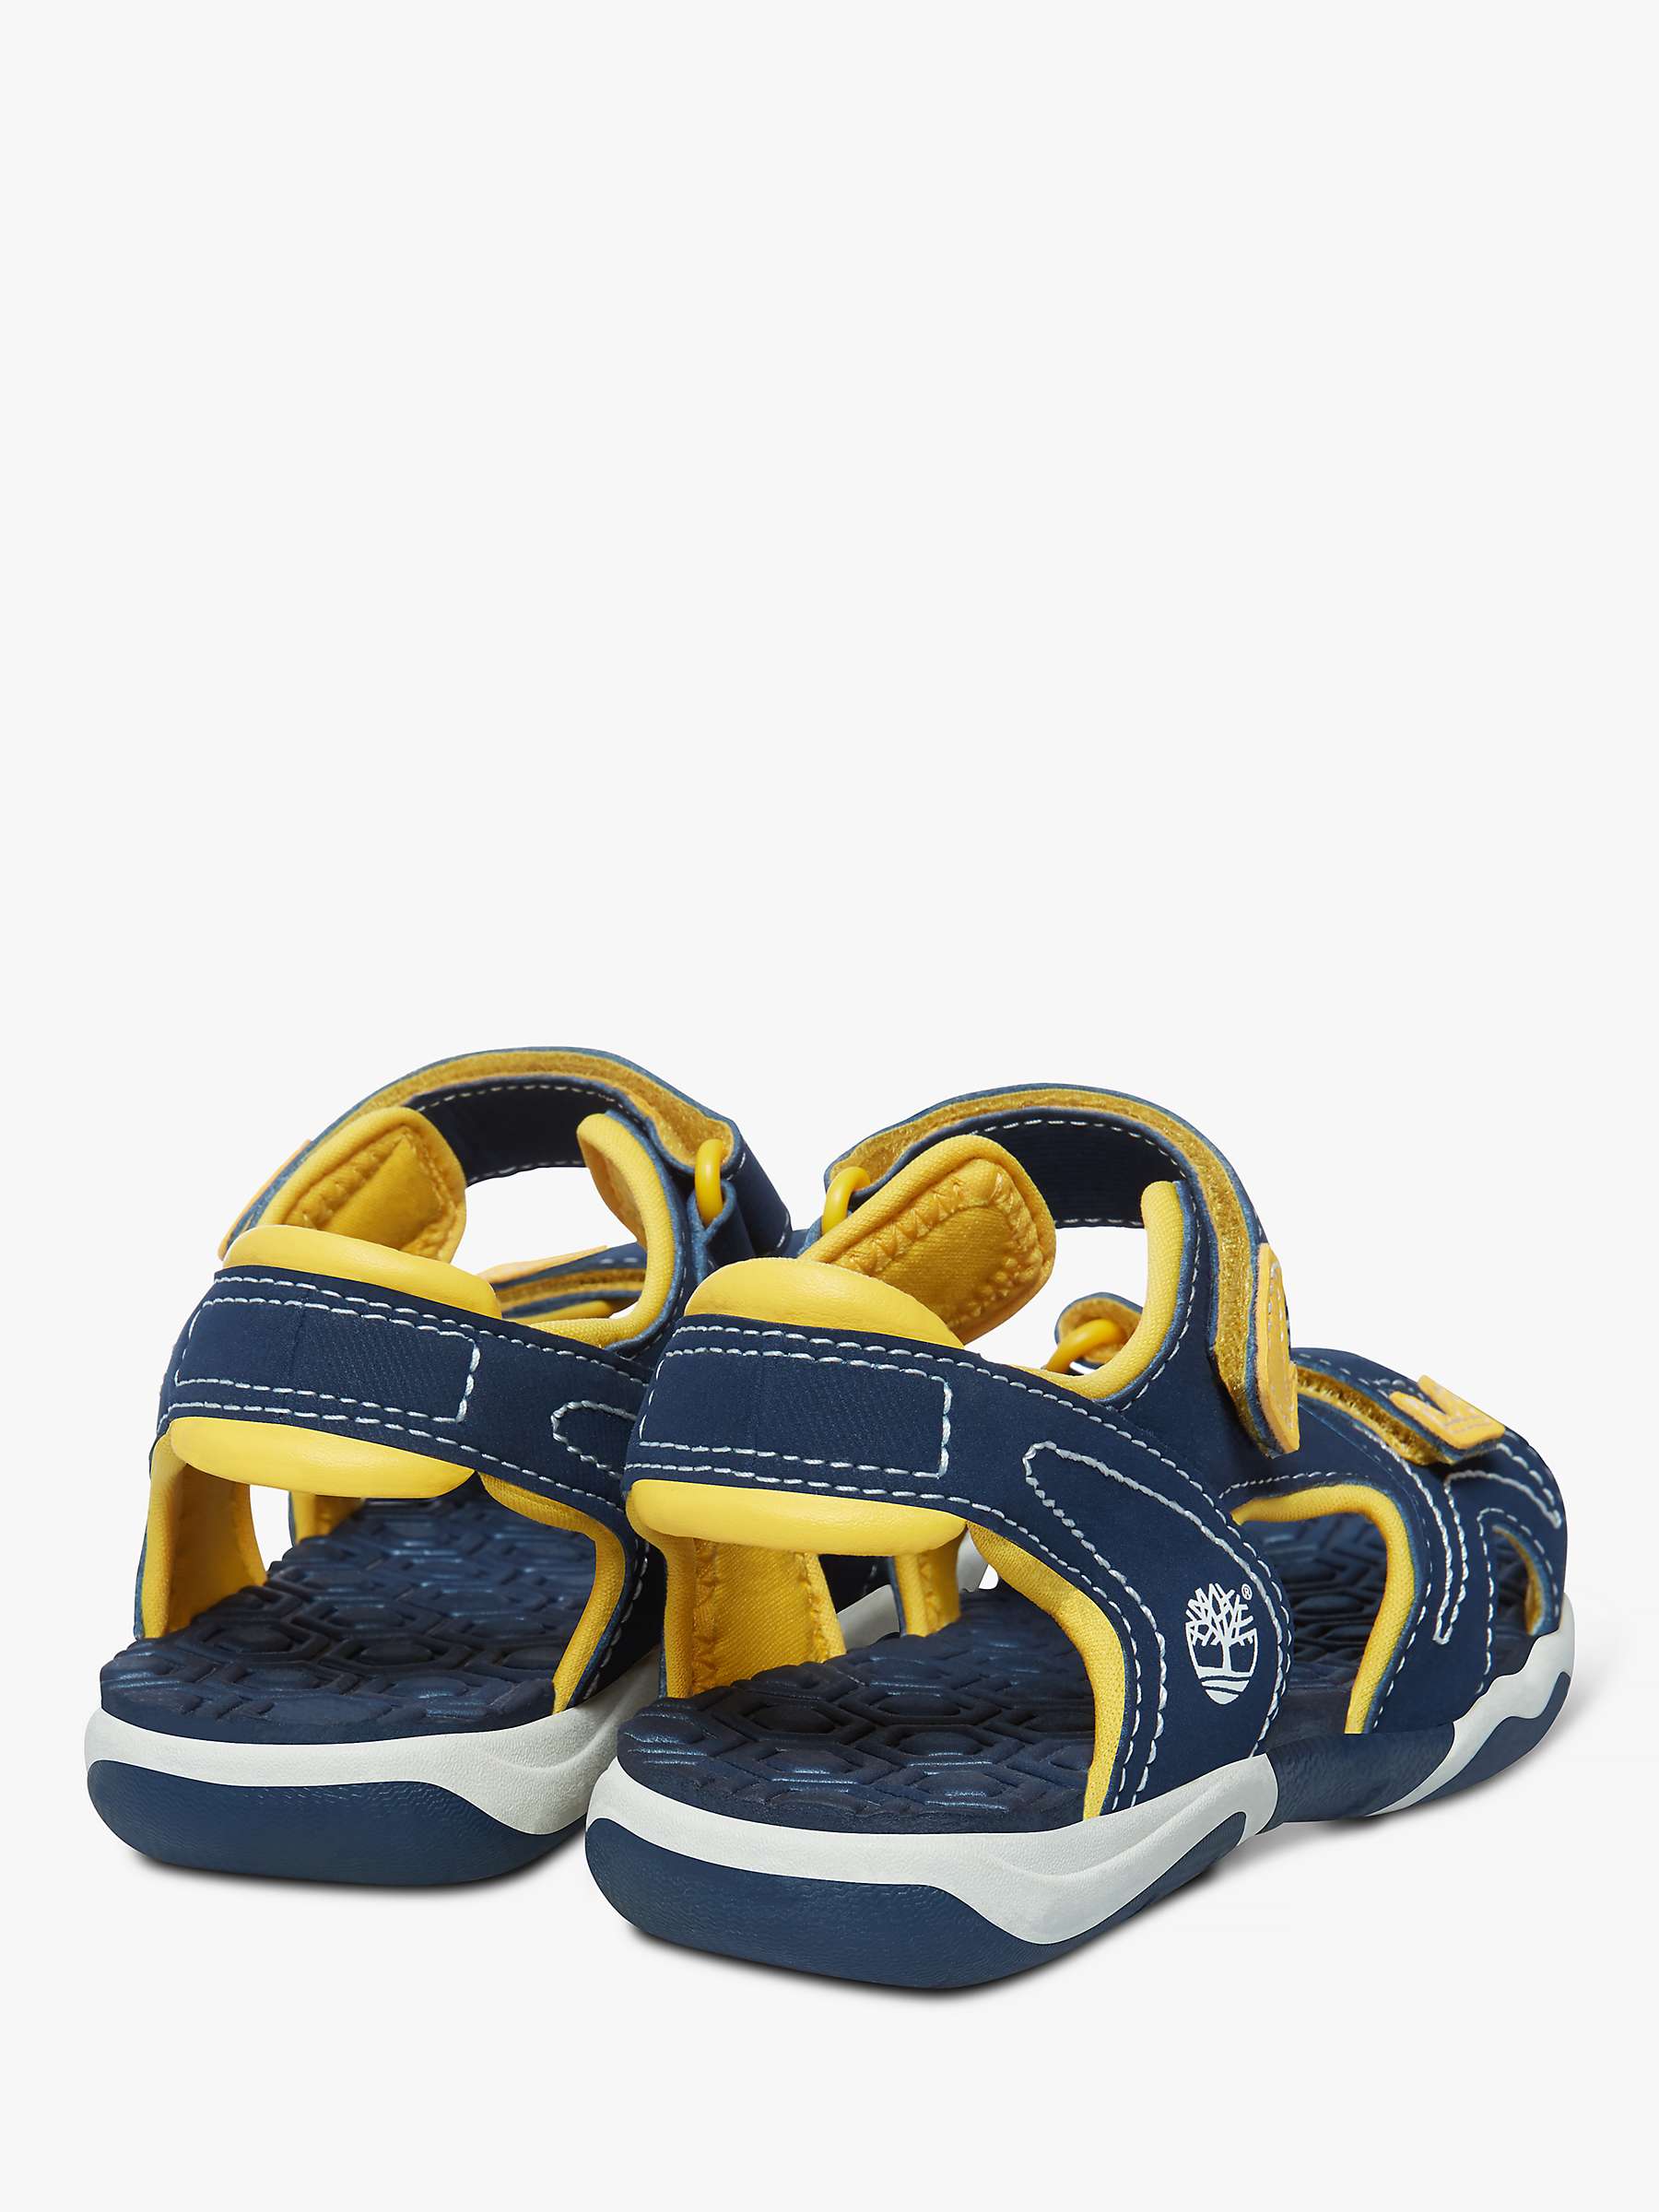 Timberland Children's Adventure Seeker Riptape Sandals, Navy/Yellow